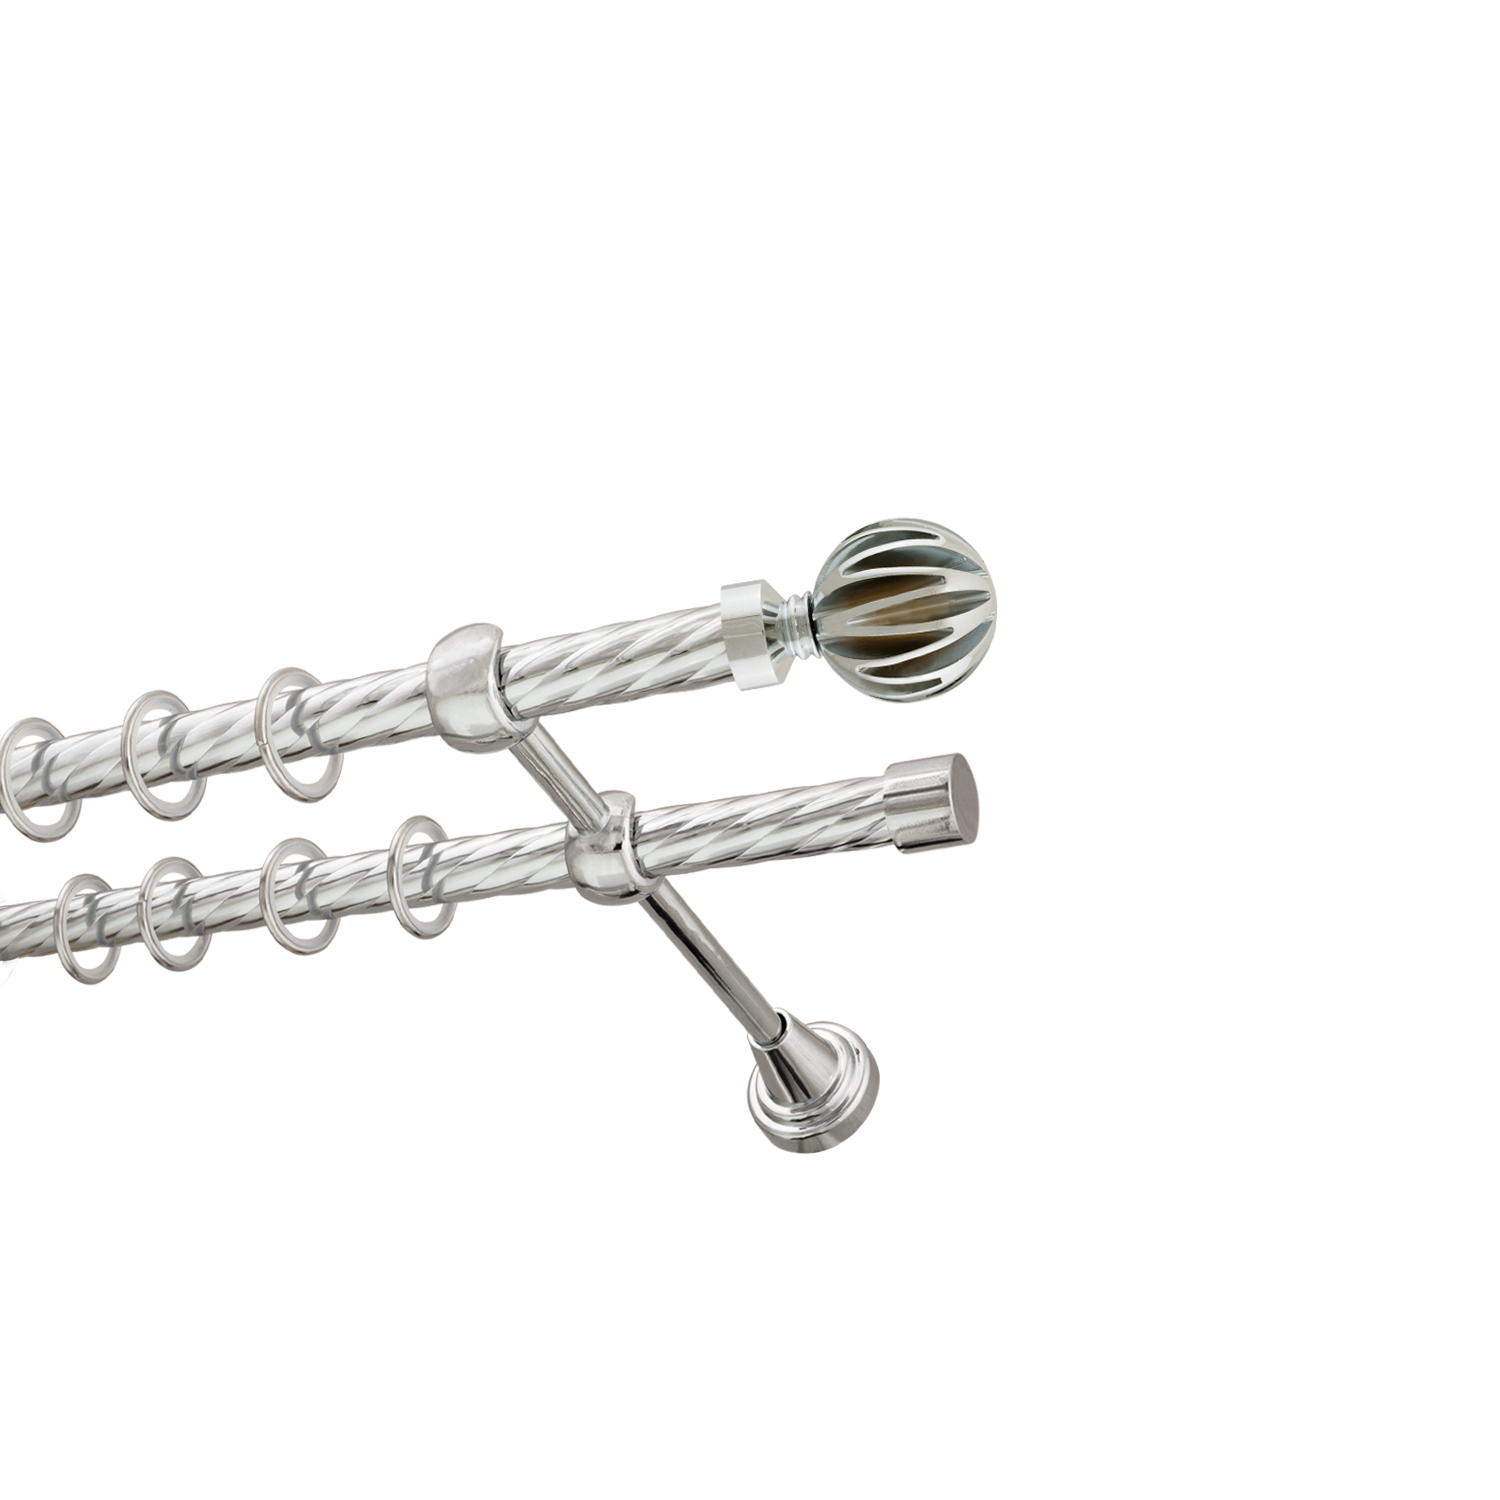 Металлический карниз для штор Шафран, двухрядный 16/16 мм, серебро, витая штанга, длина 180 см - фото Wikidecor.ru